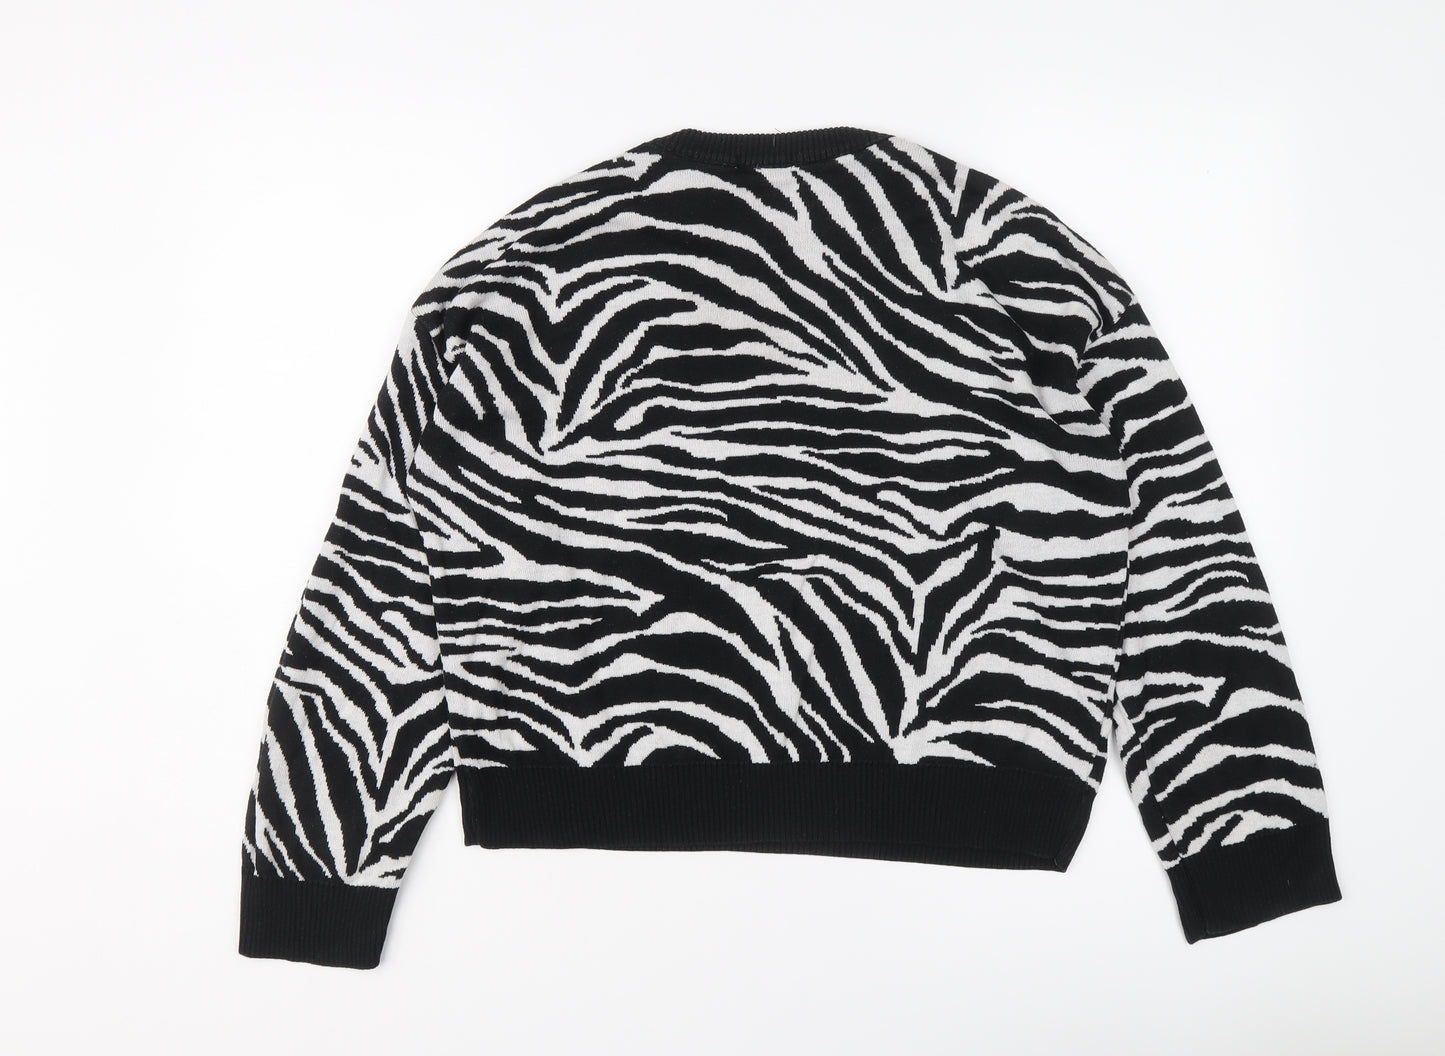 New Look Womens Black Round Neck Animal Print Acrylic Pullover Jumper Size L - Zebra Print